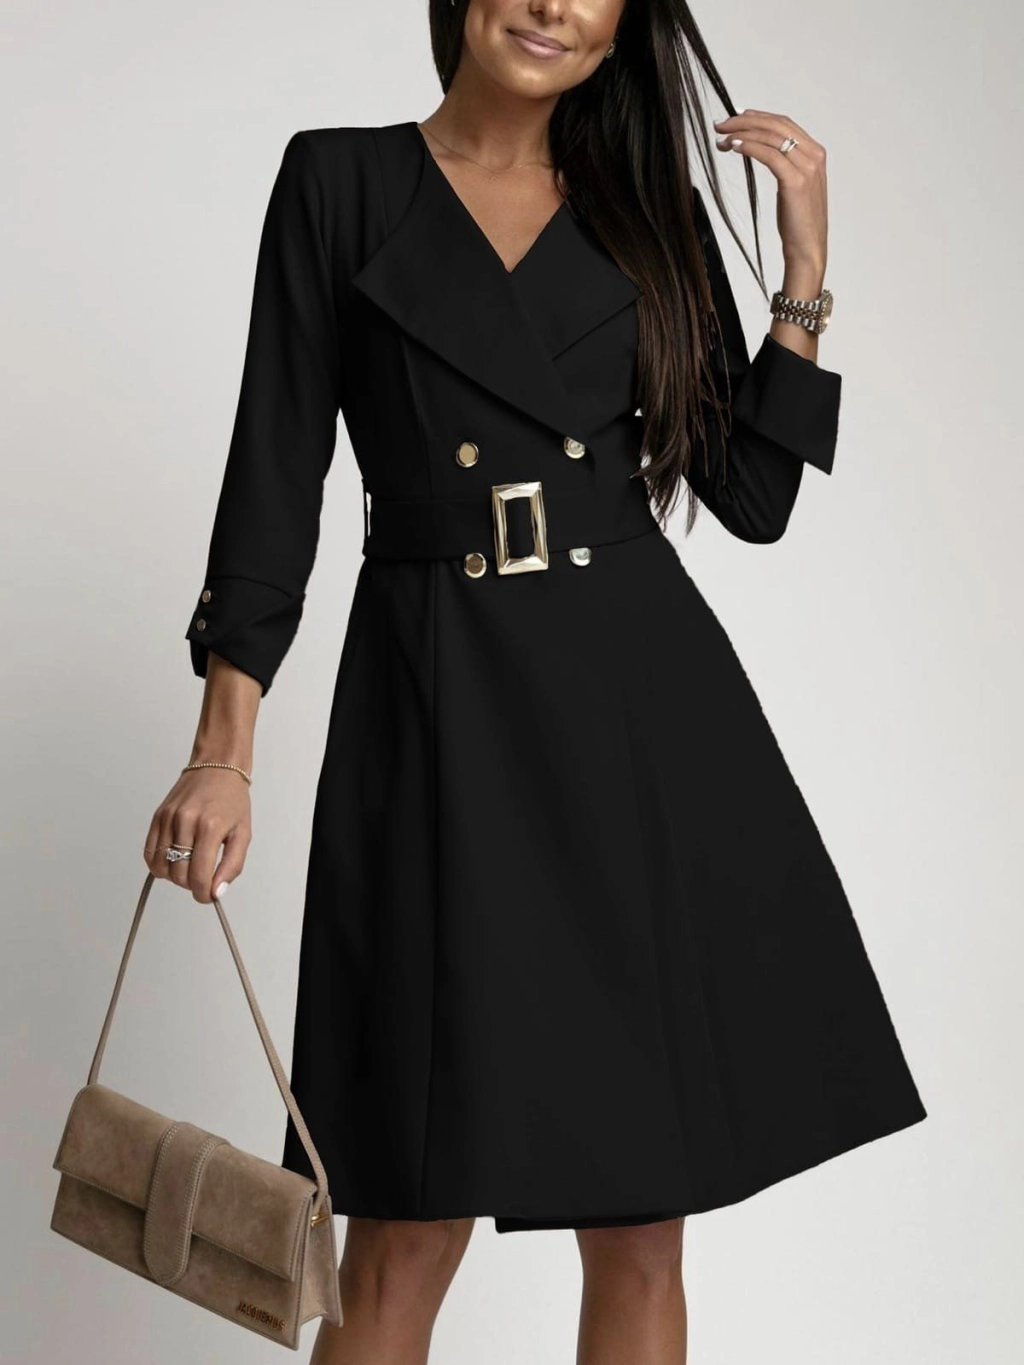 women's black dress